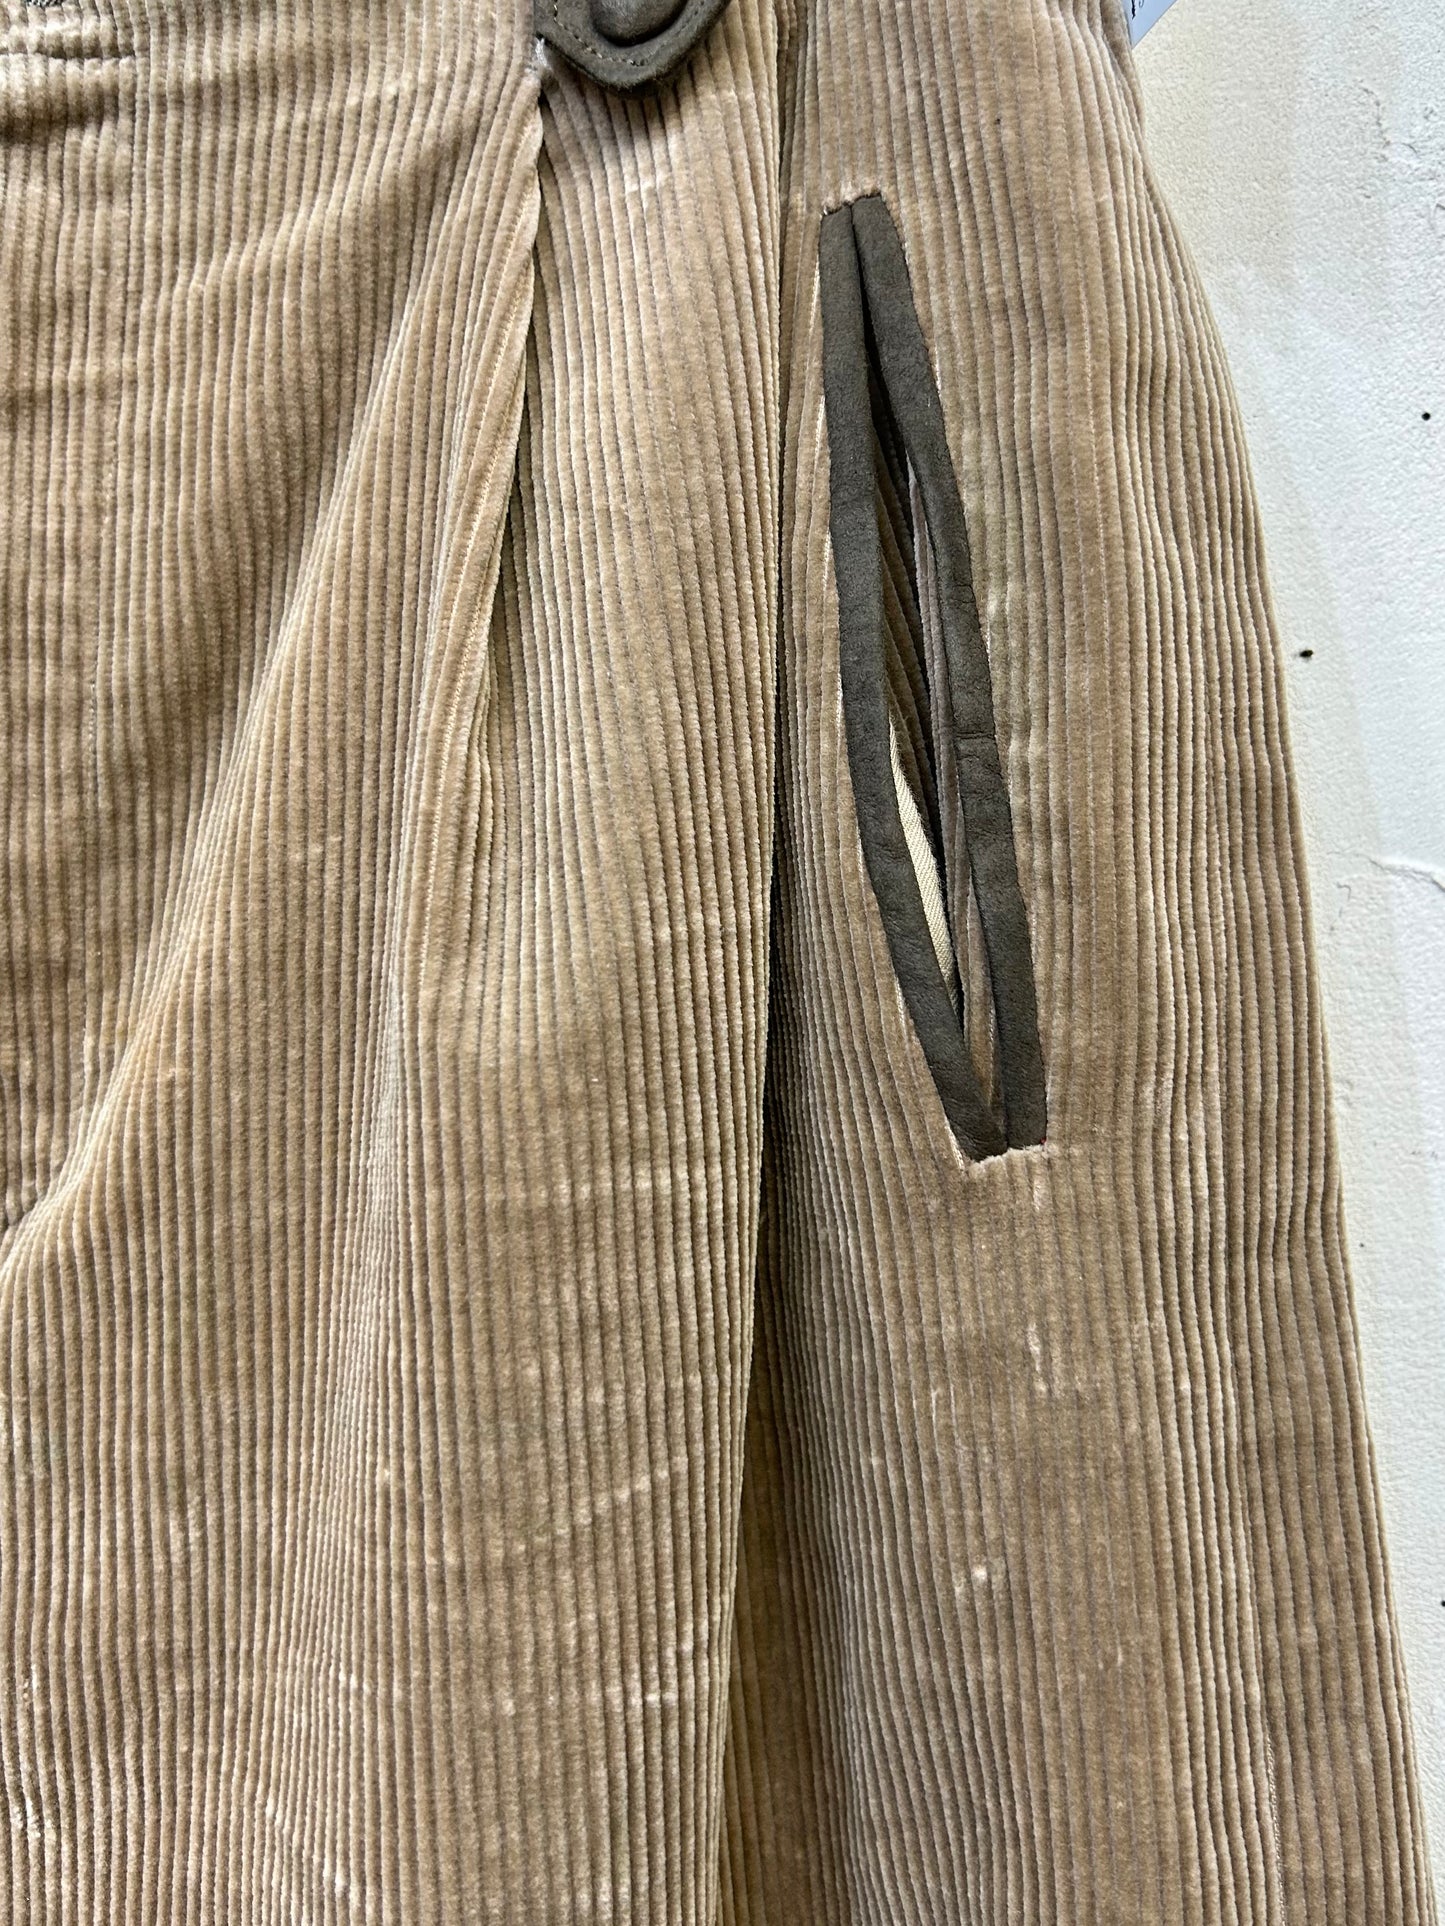 Vintage Corduroy Half Pants [I25005]